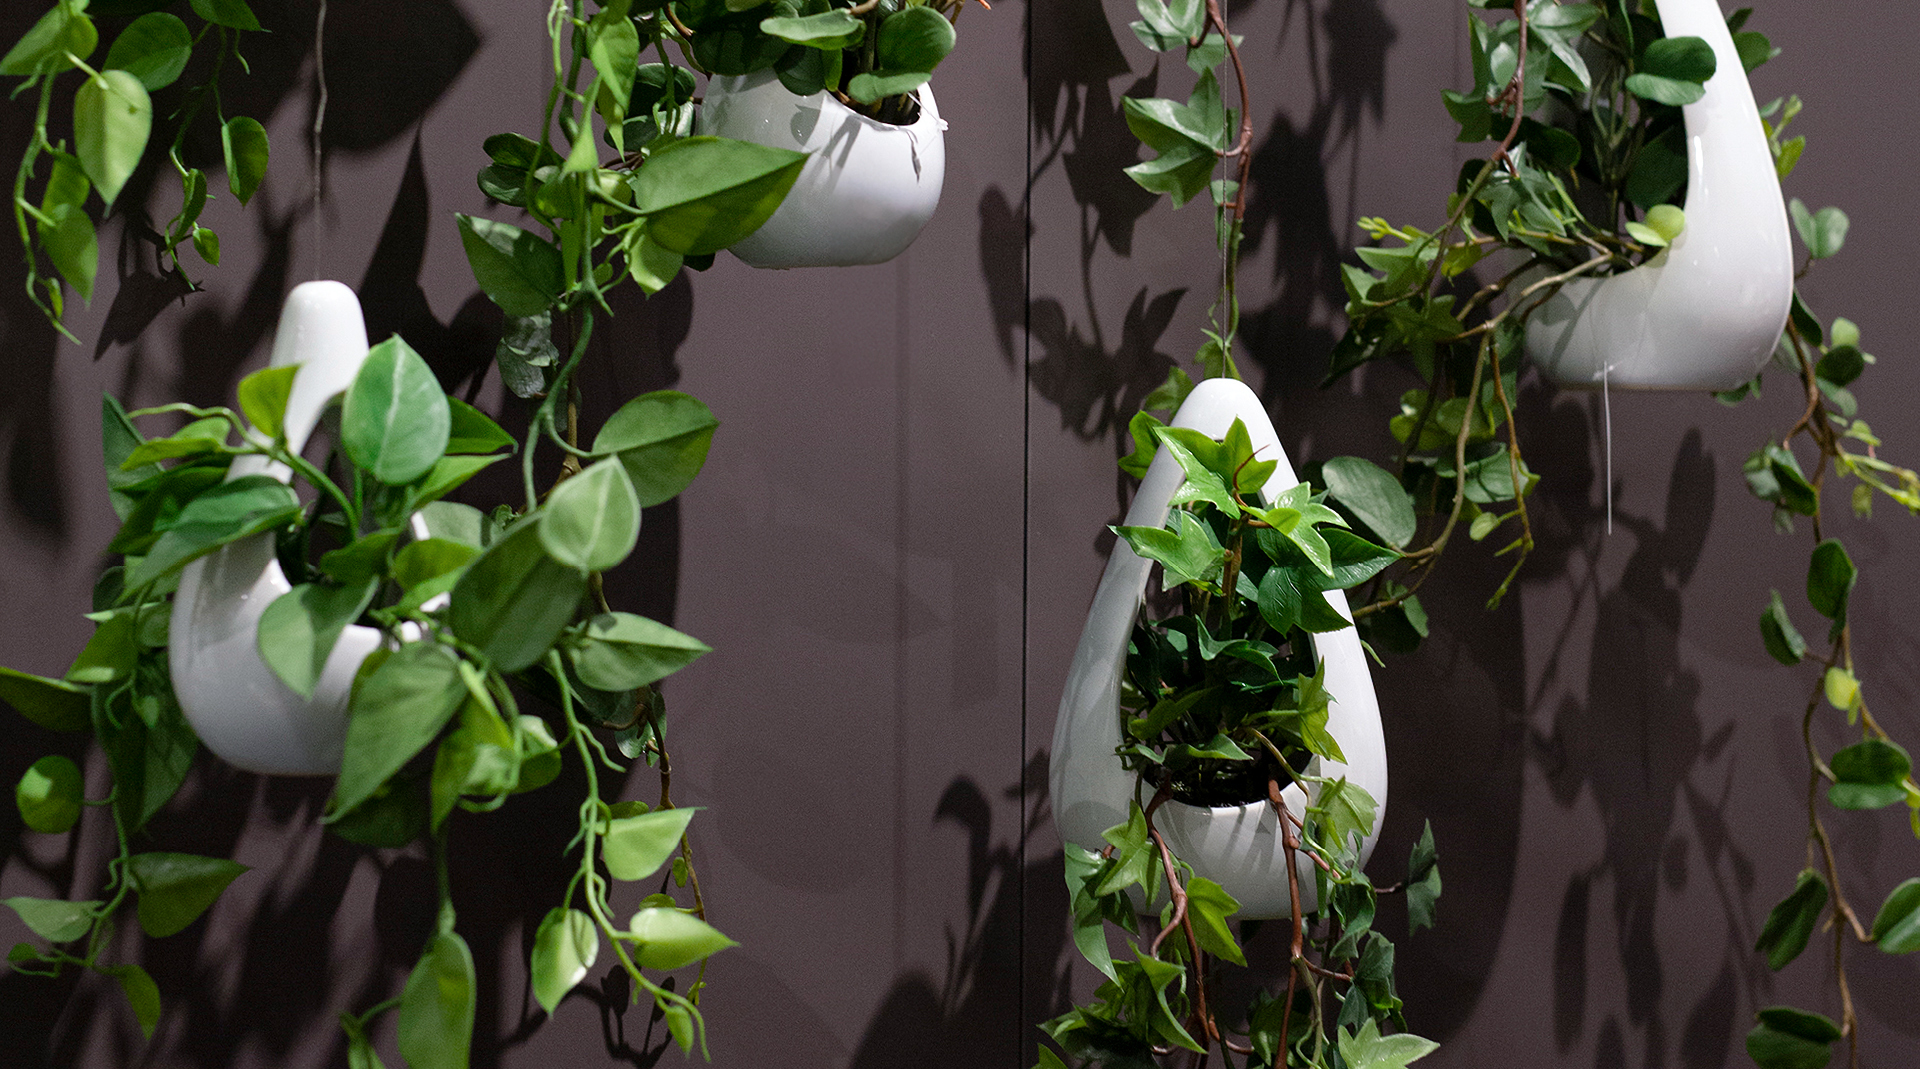 Plants in hanging vases